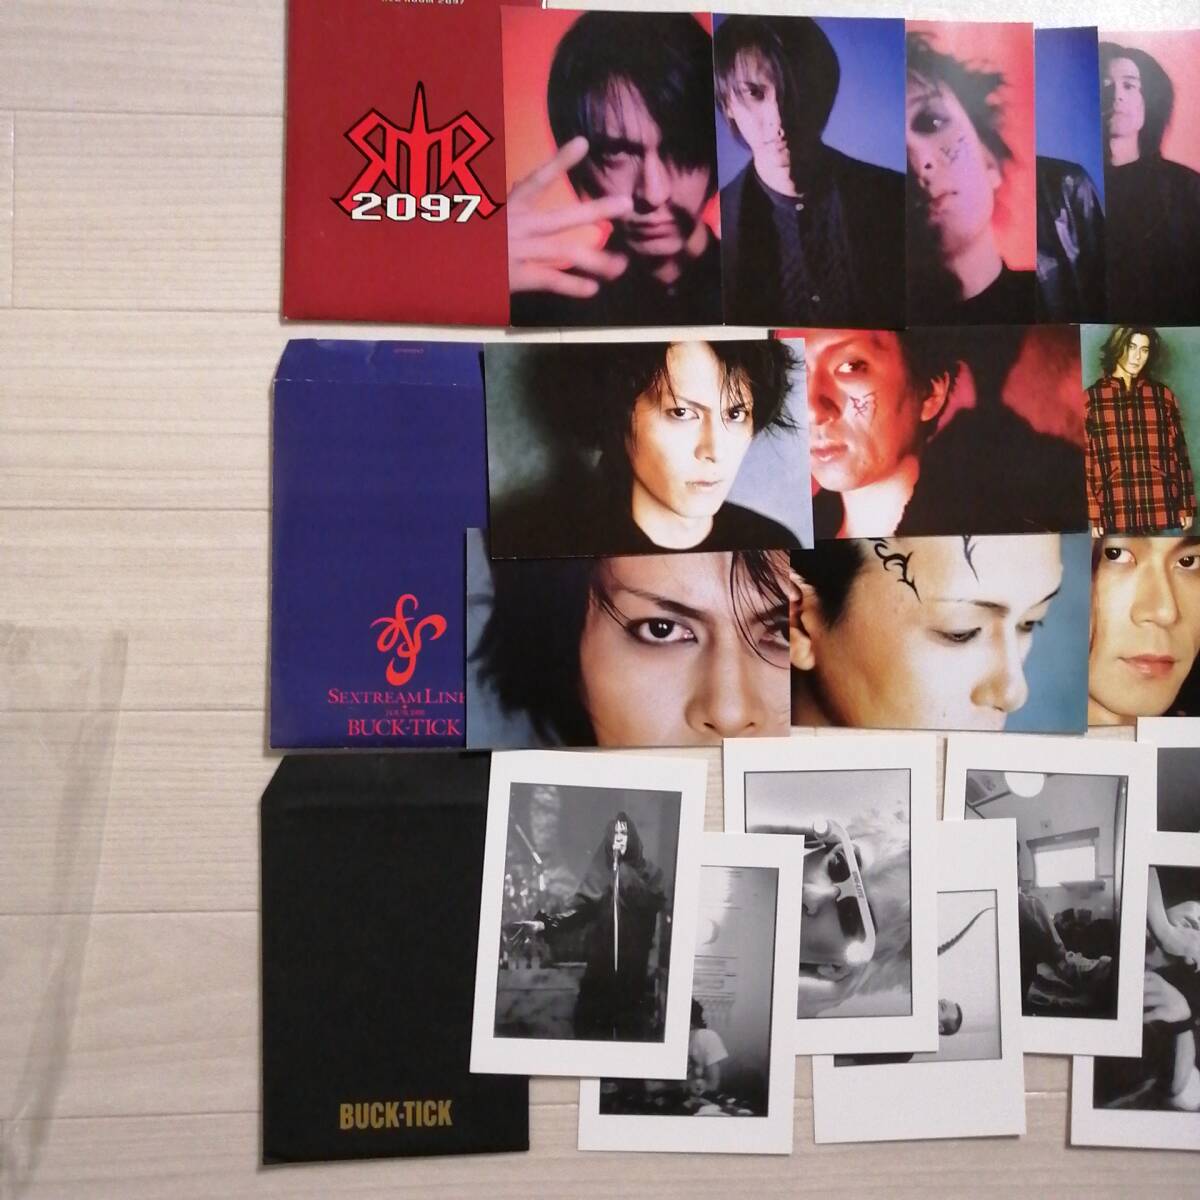 BUCK-TICK A⑩ postcard 3 sack set 30 sheets RED ROOM 2097*SEXTREAN LINER TOUR 1998 other new goods goods Sakurai ..